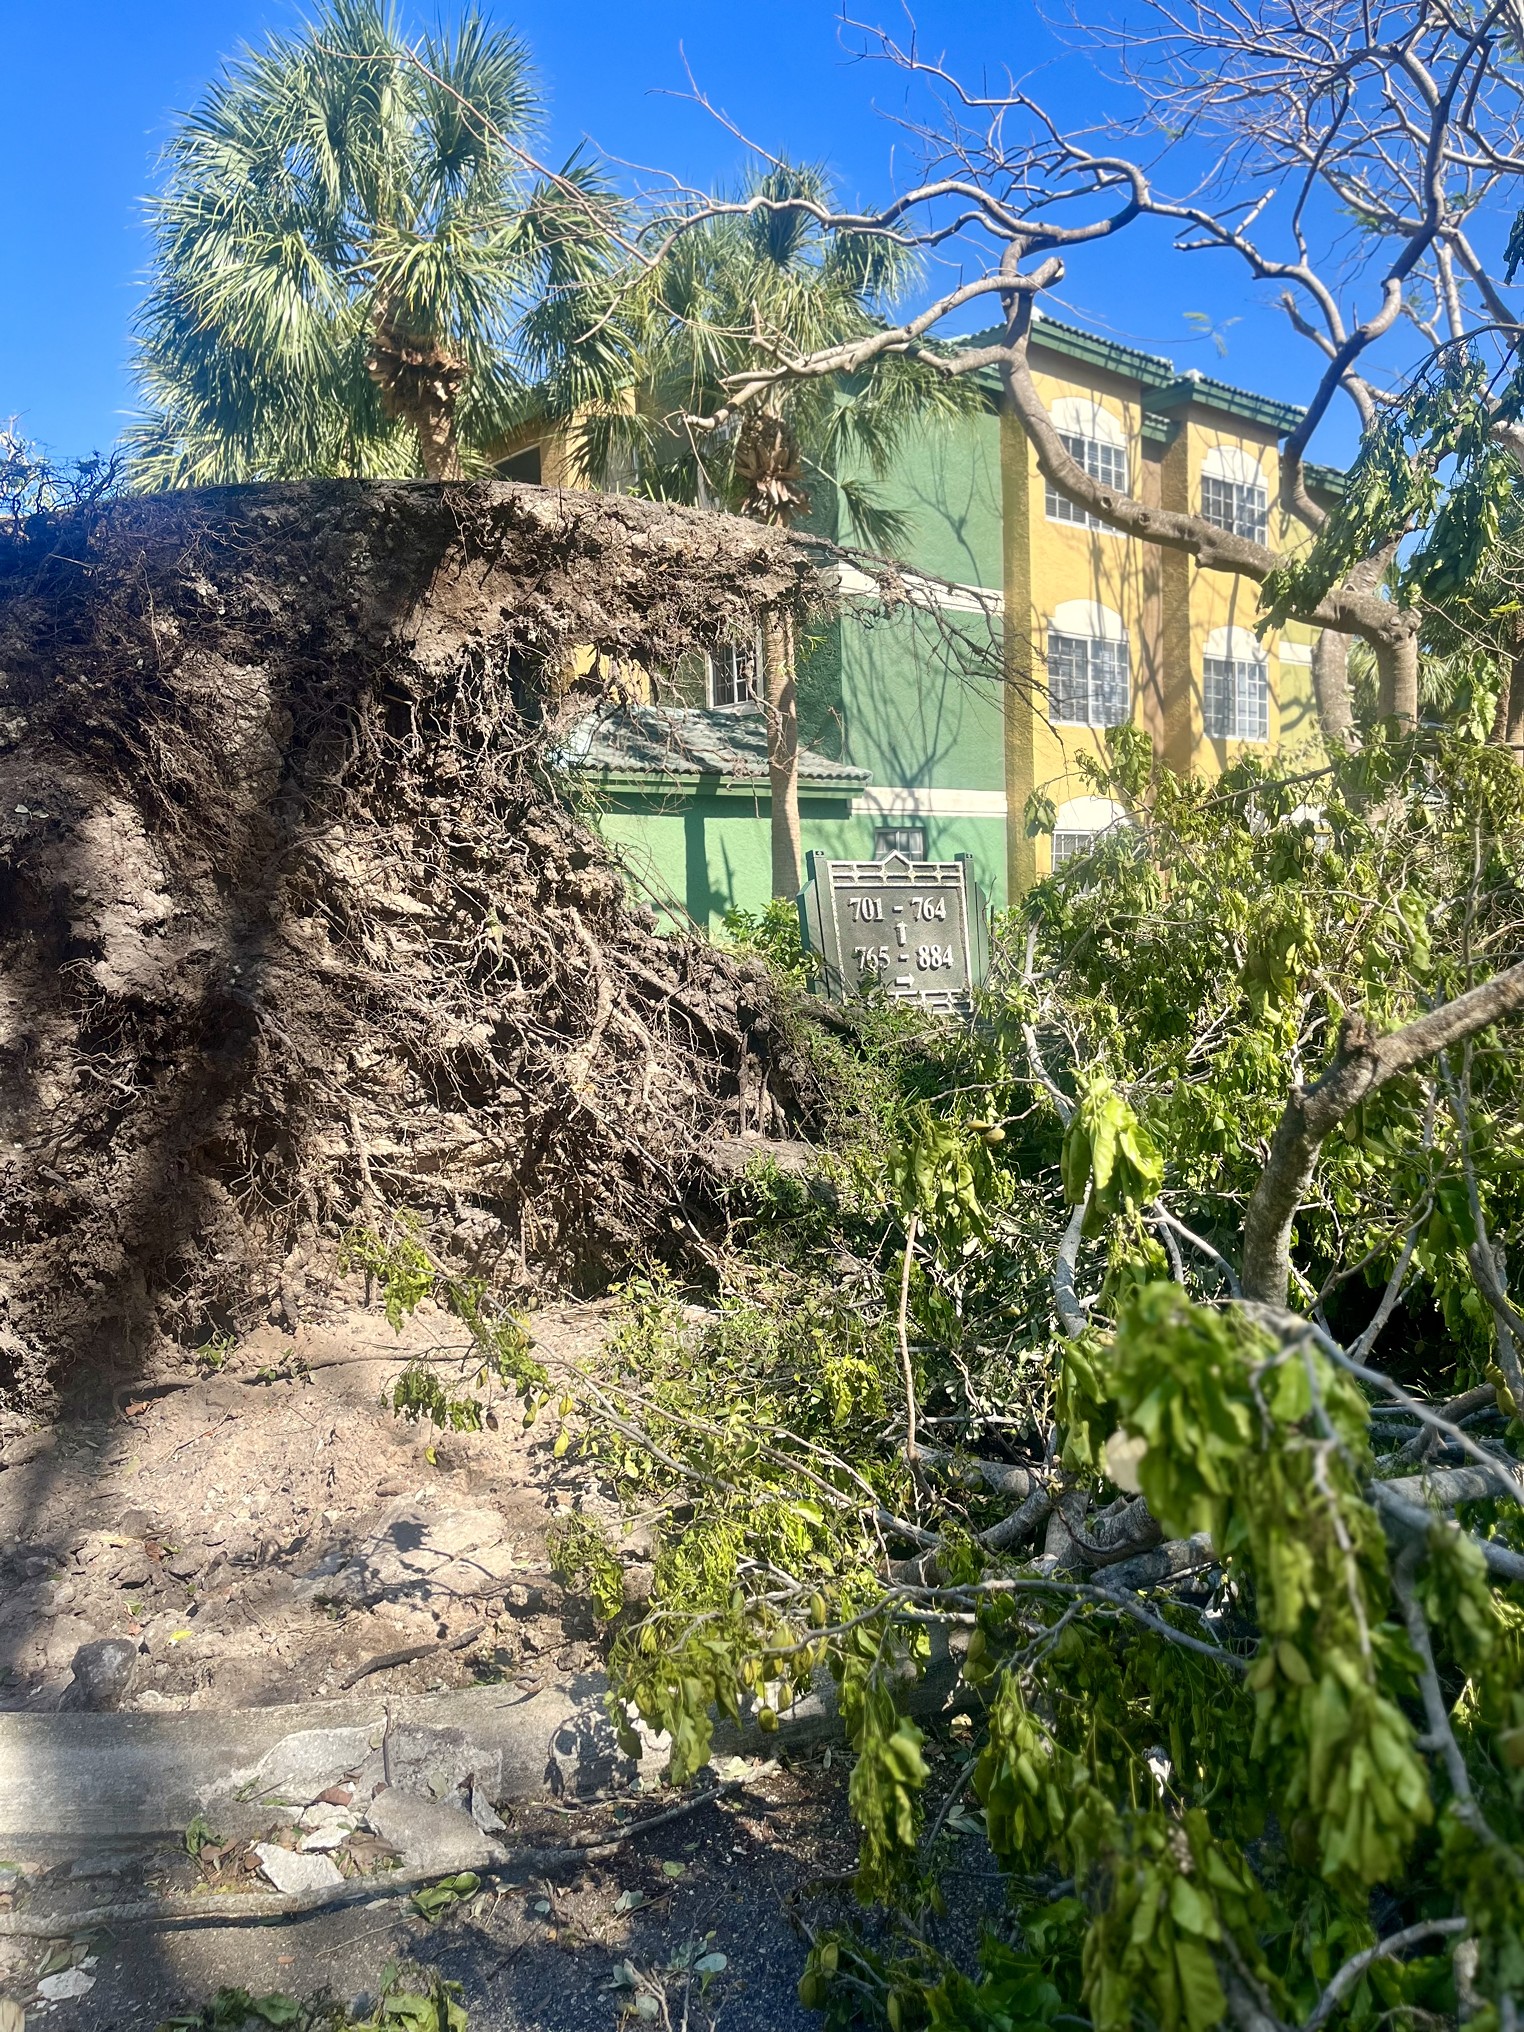 Residents Narrowly Escape Wrath of Tornado in Palm Beach Gardens